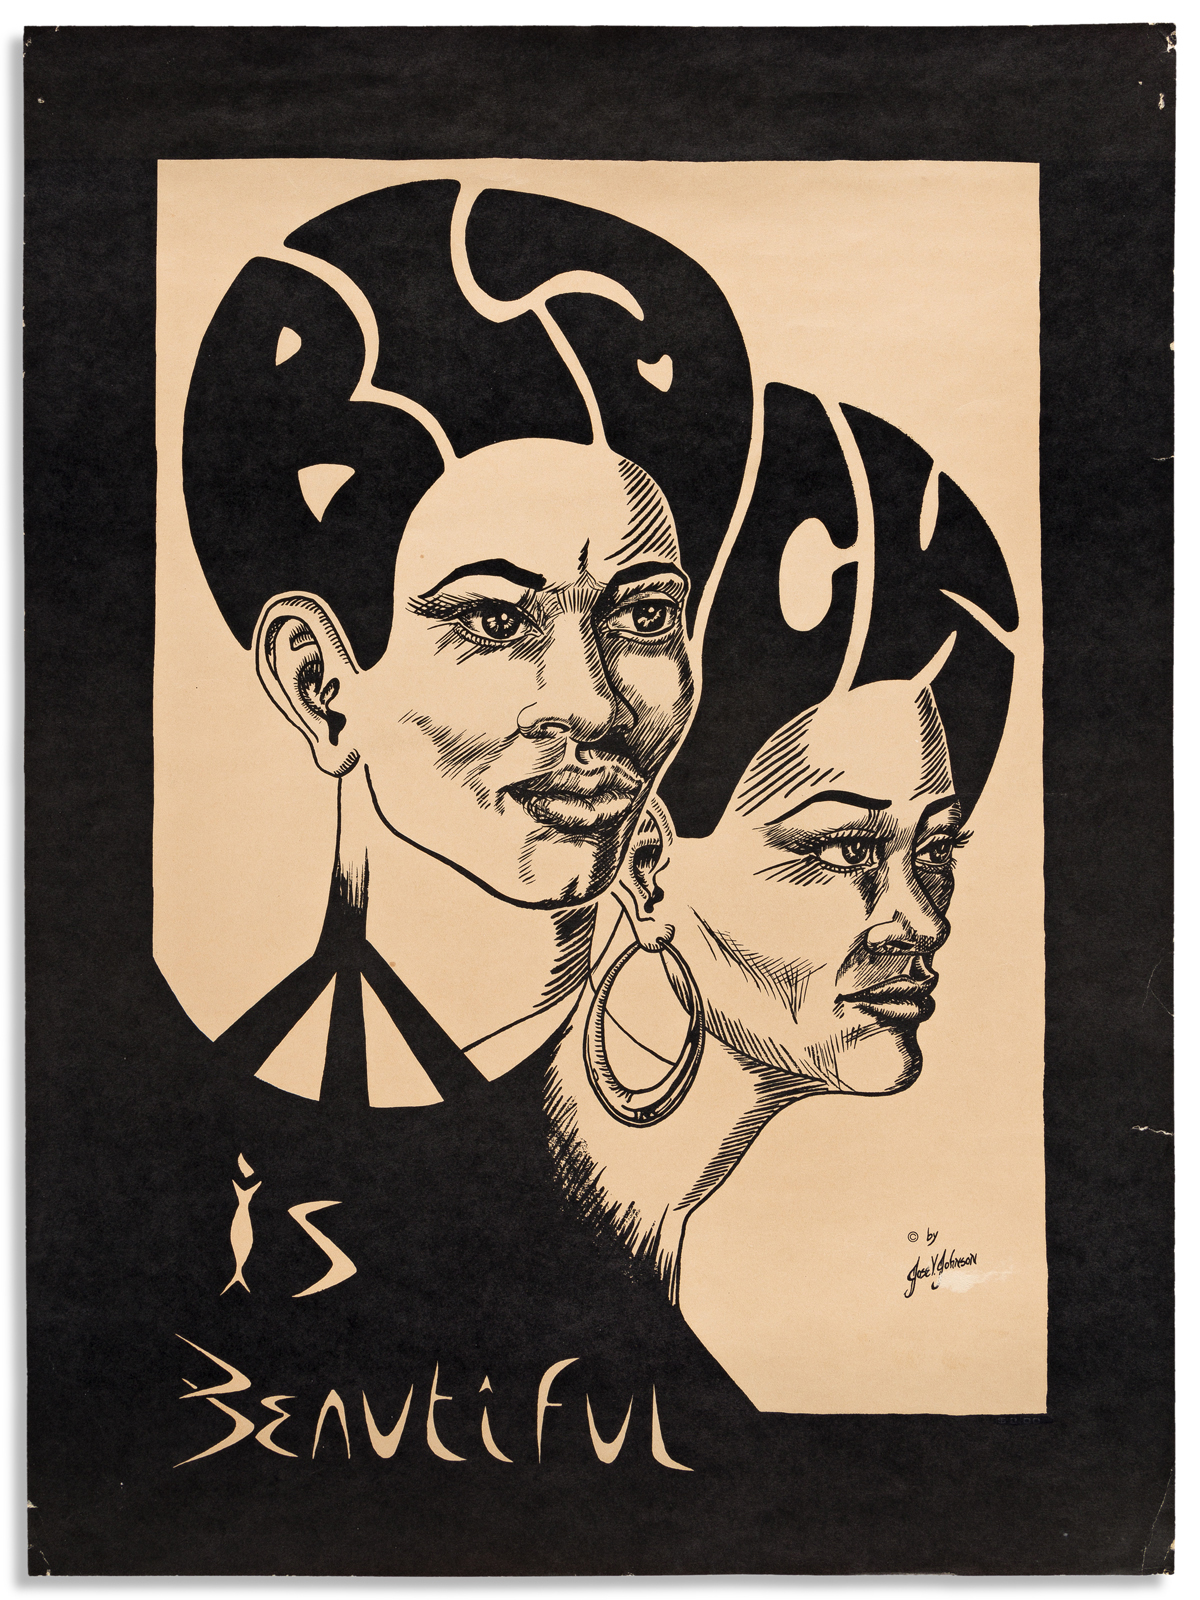 (ART.) José V. Johnson, artist. Black is Beautiful.